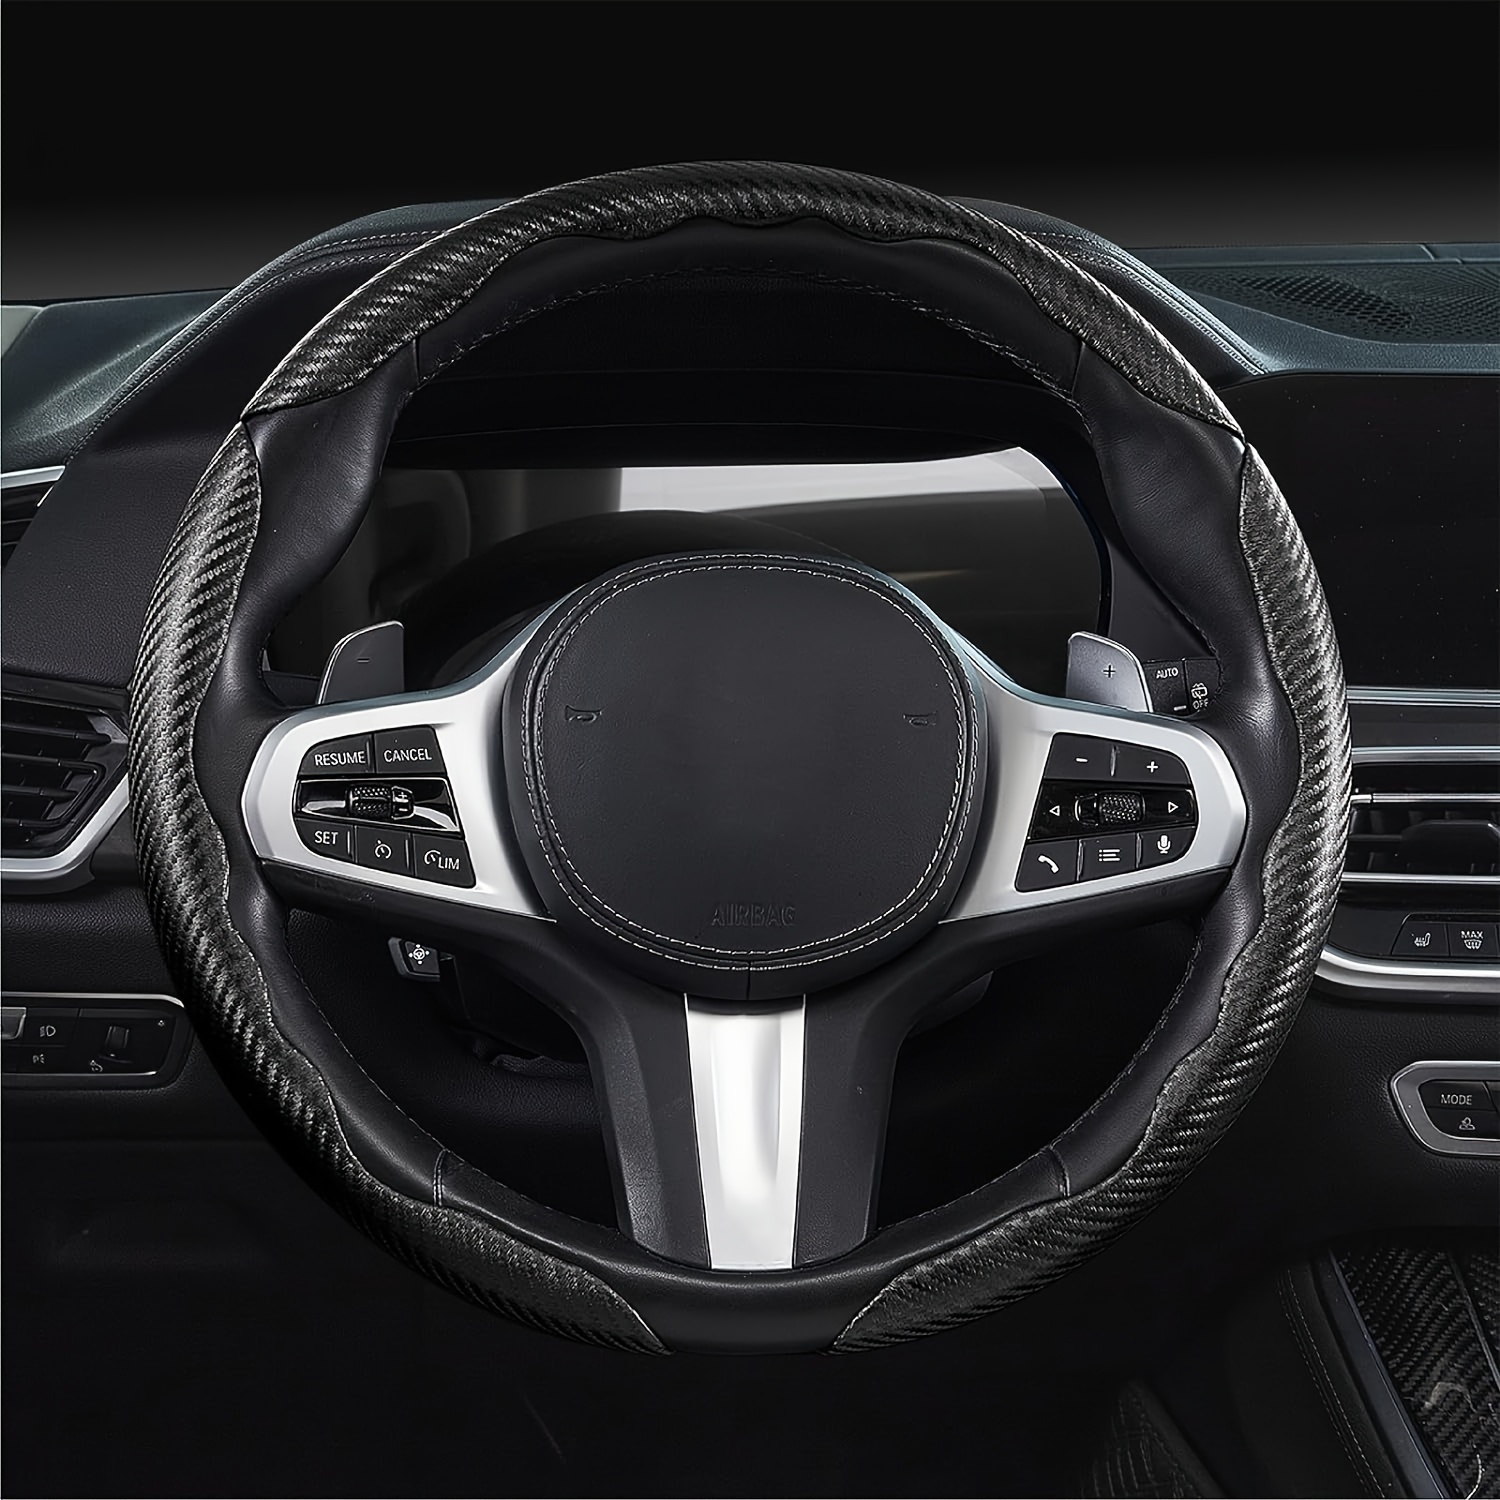 

3pcs/set Carbon Fiber Matte Clasp Steering Wheel Cover, Anti-slip, Universal Size (15.16in/38.5cm), 4 Seasons Car Wheel Protector